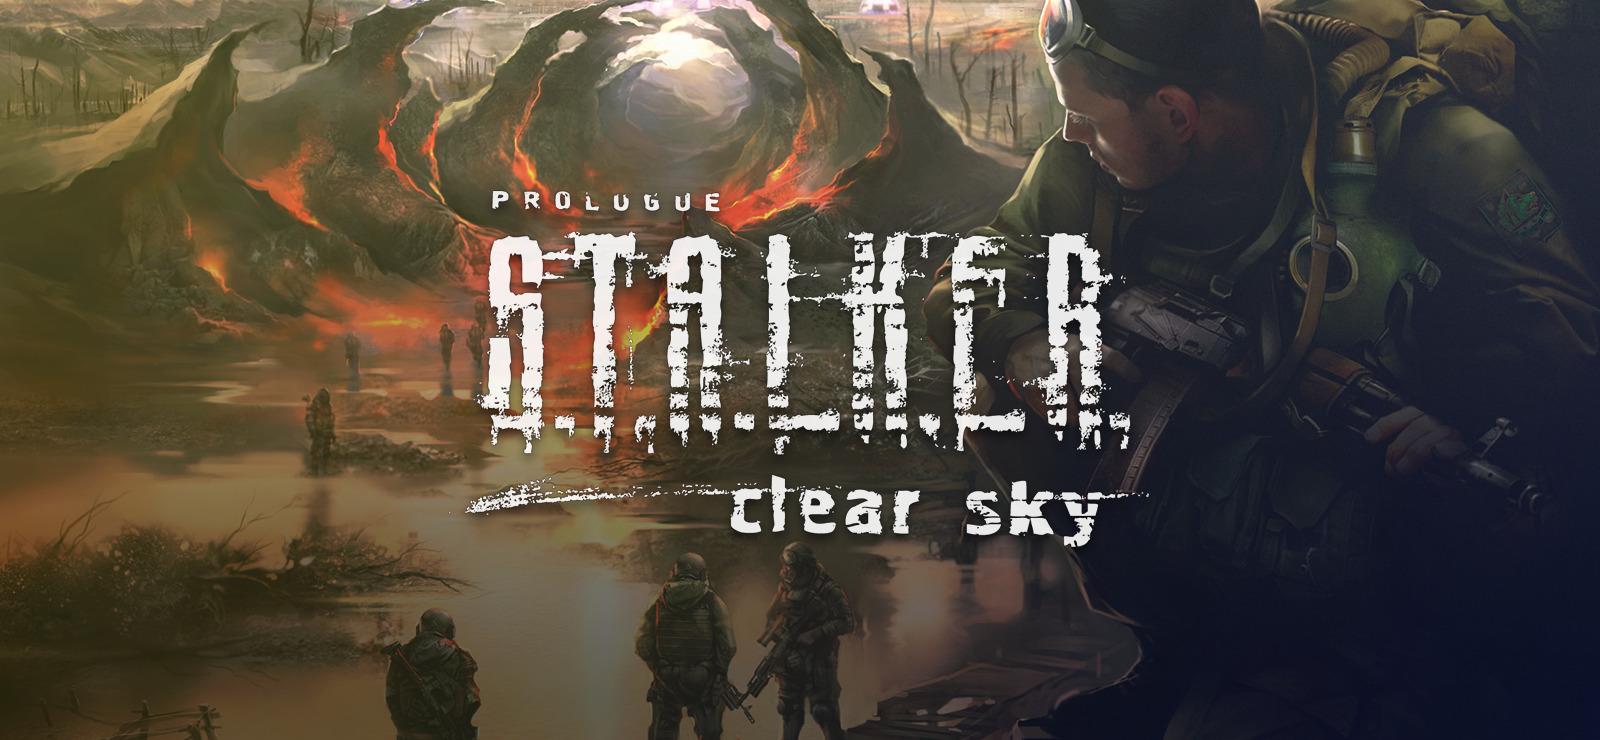 75% S.T.A.L.K.E.R.: Clear Sky on GOG.com